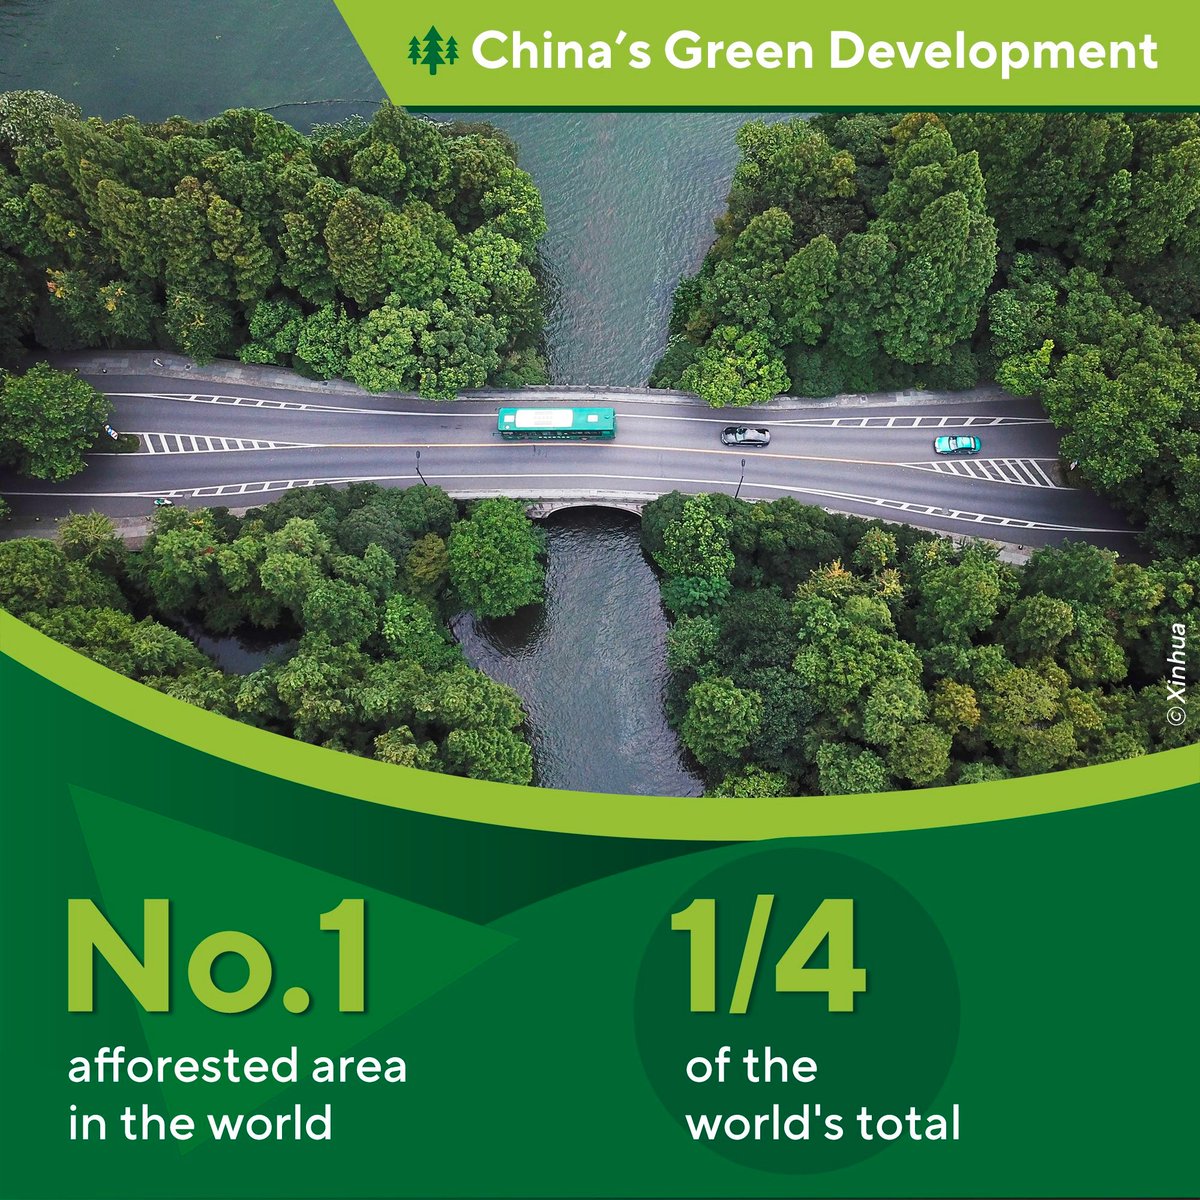 Green is gold. #Chinarama #GreenDevelopment